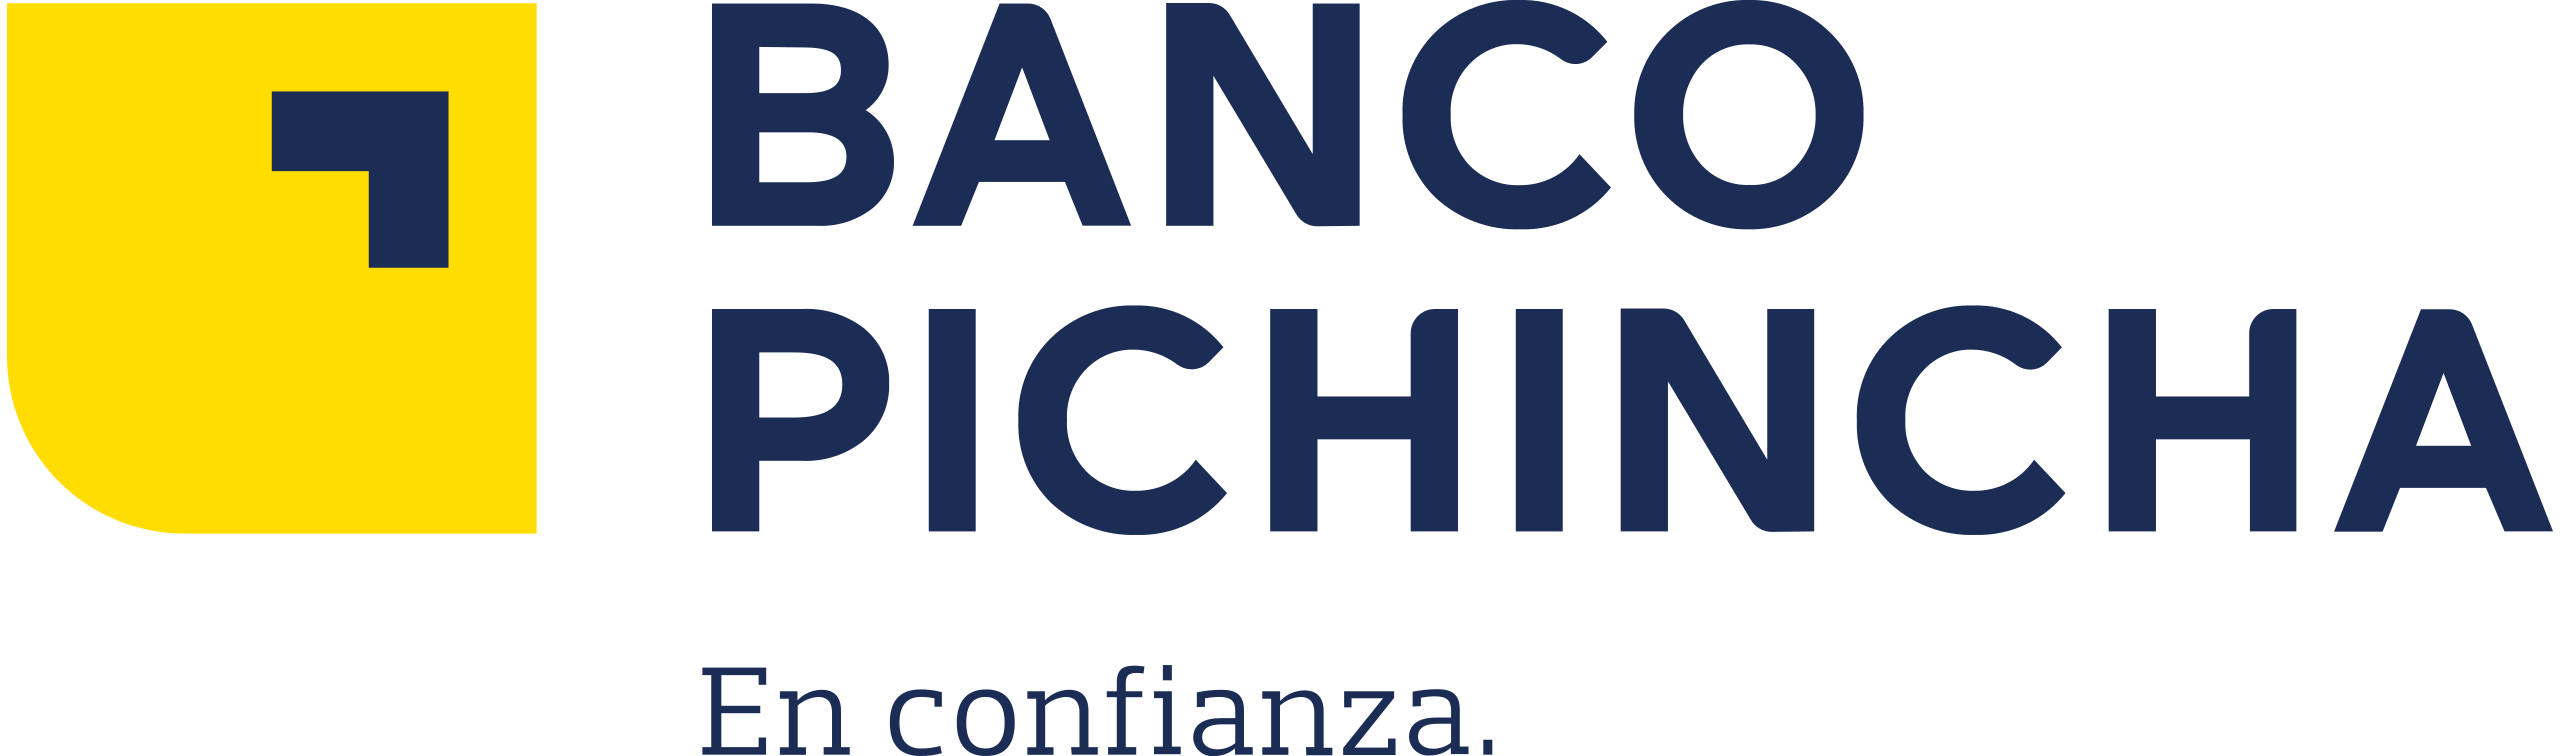 2560px-Banco_Pichincha_logo_2018.svg